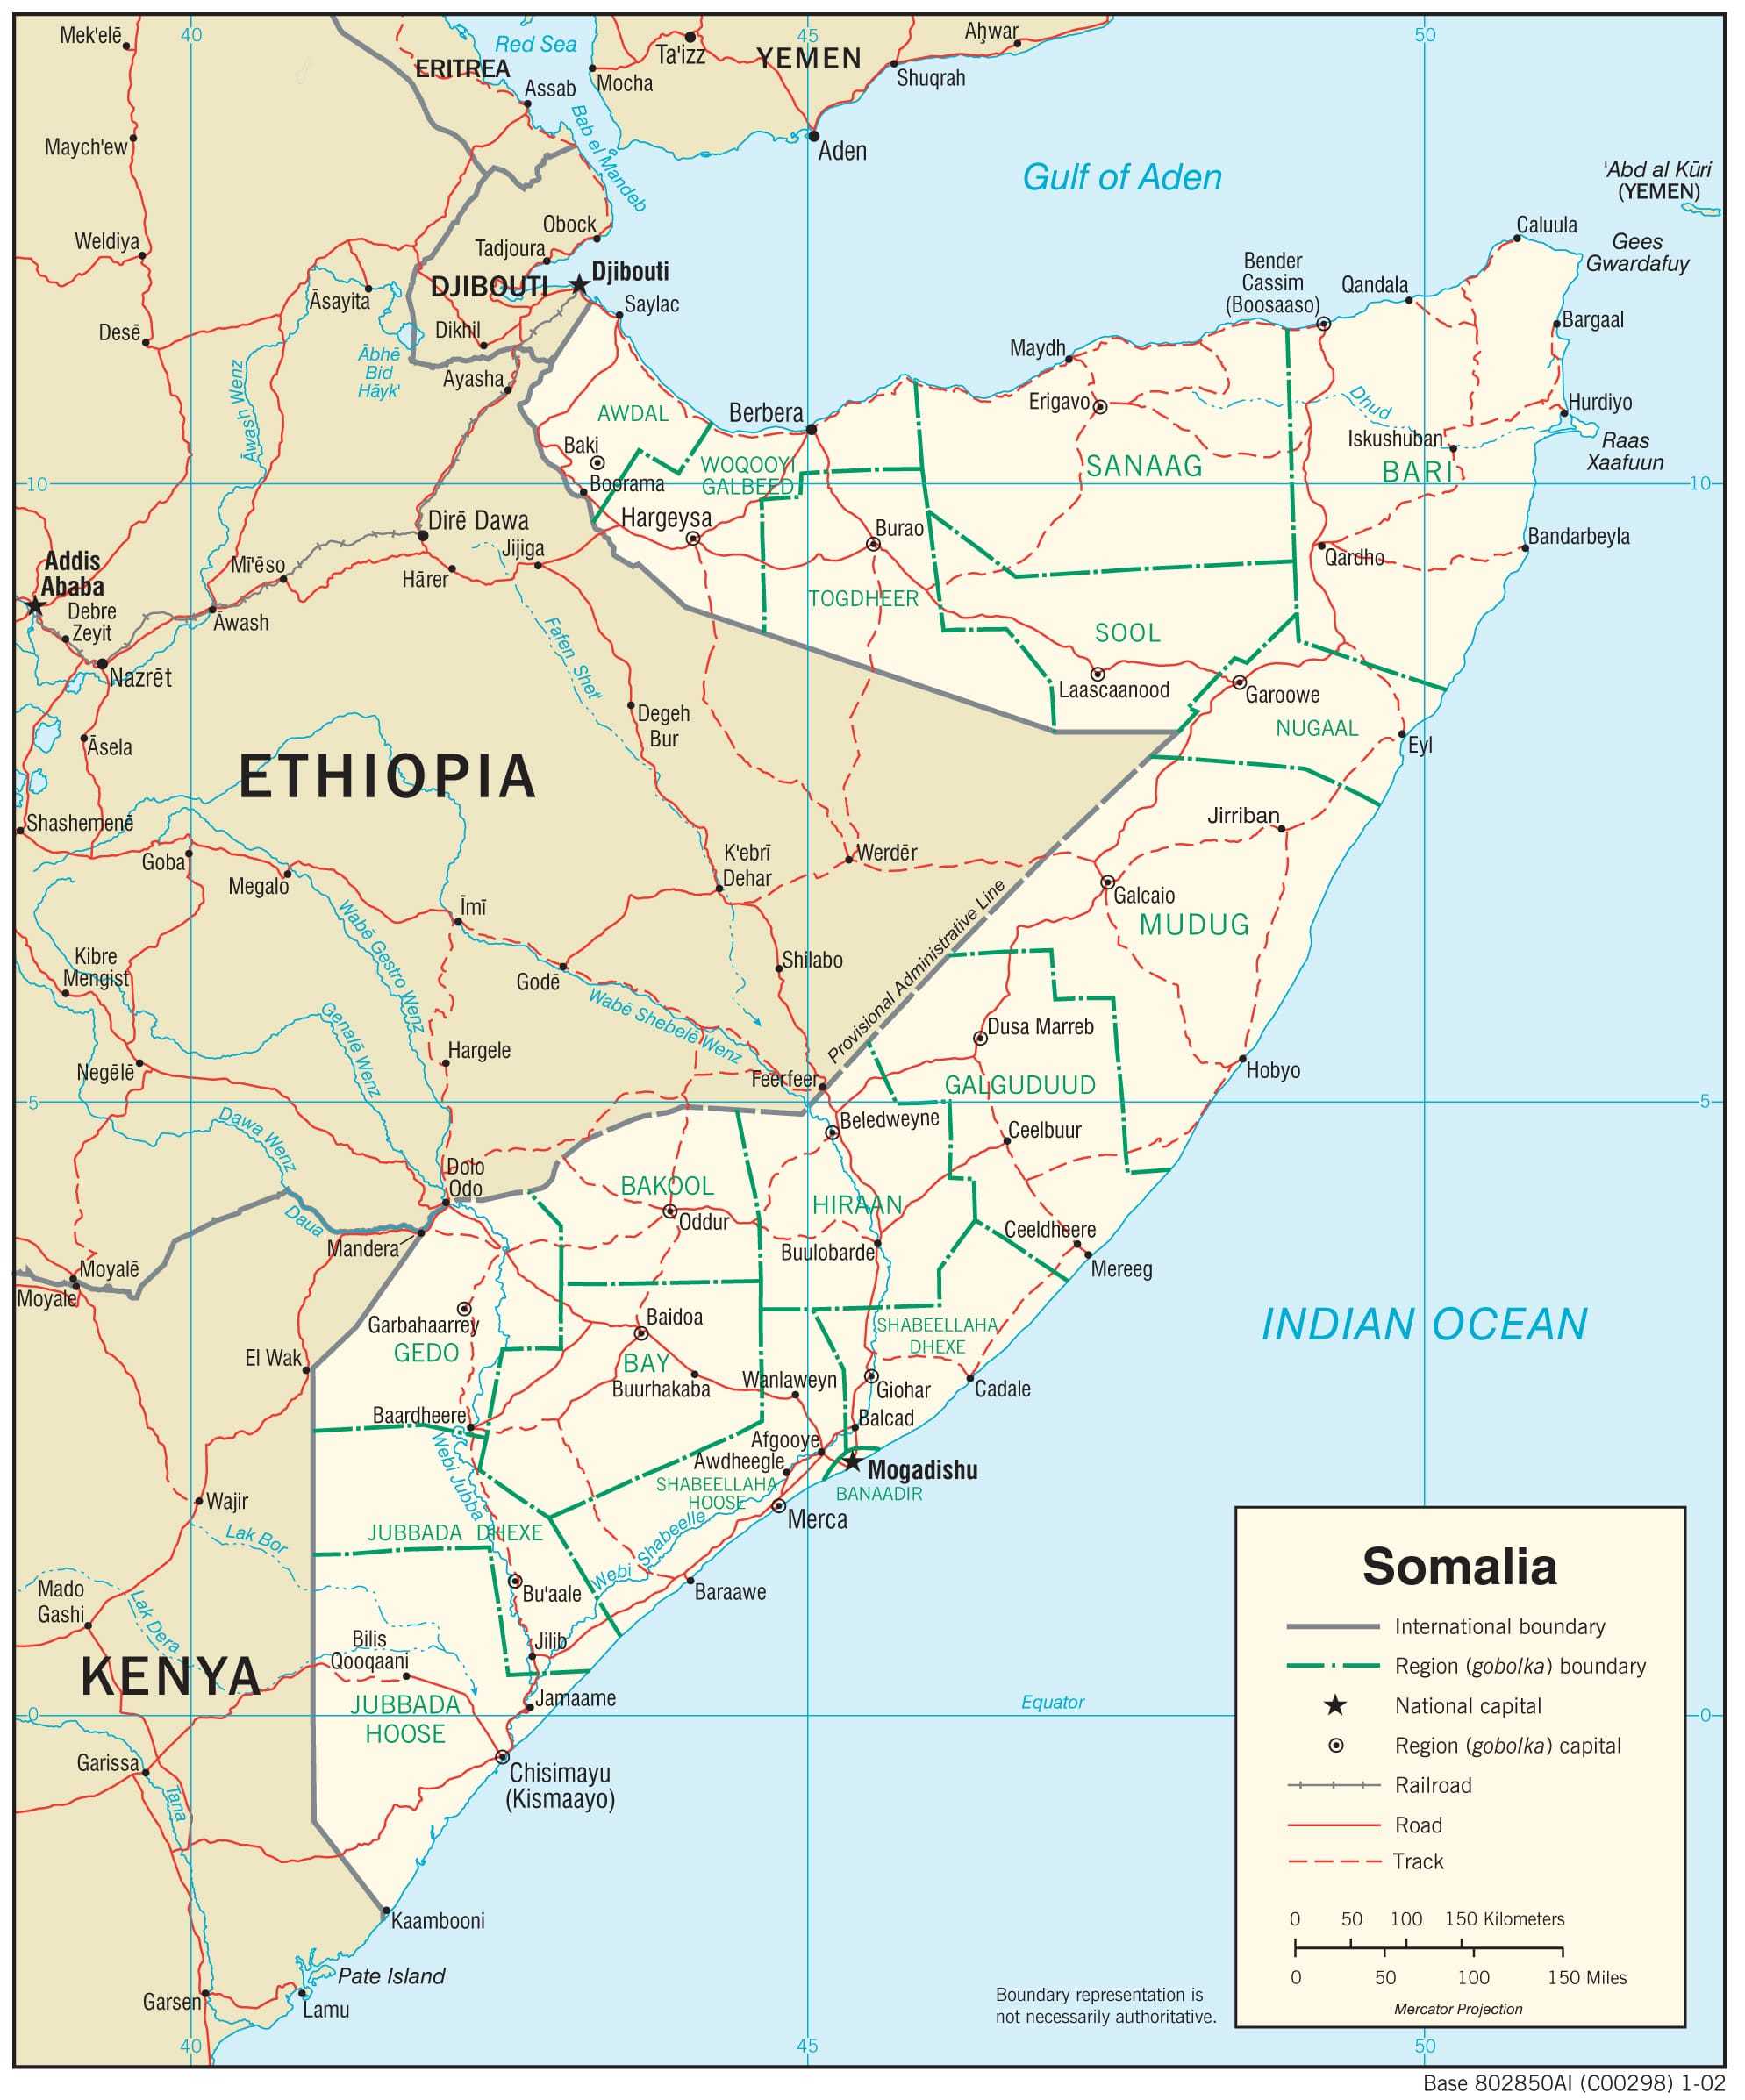 Transportation map of Somalia.